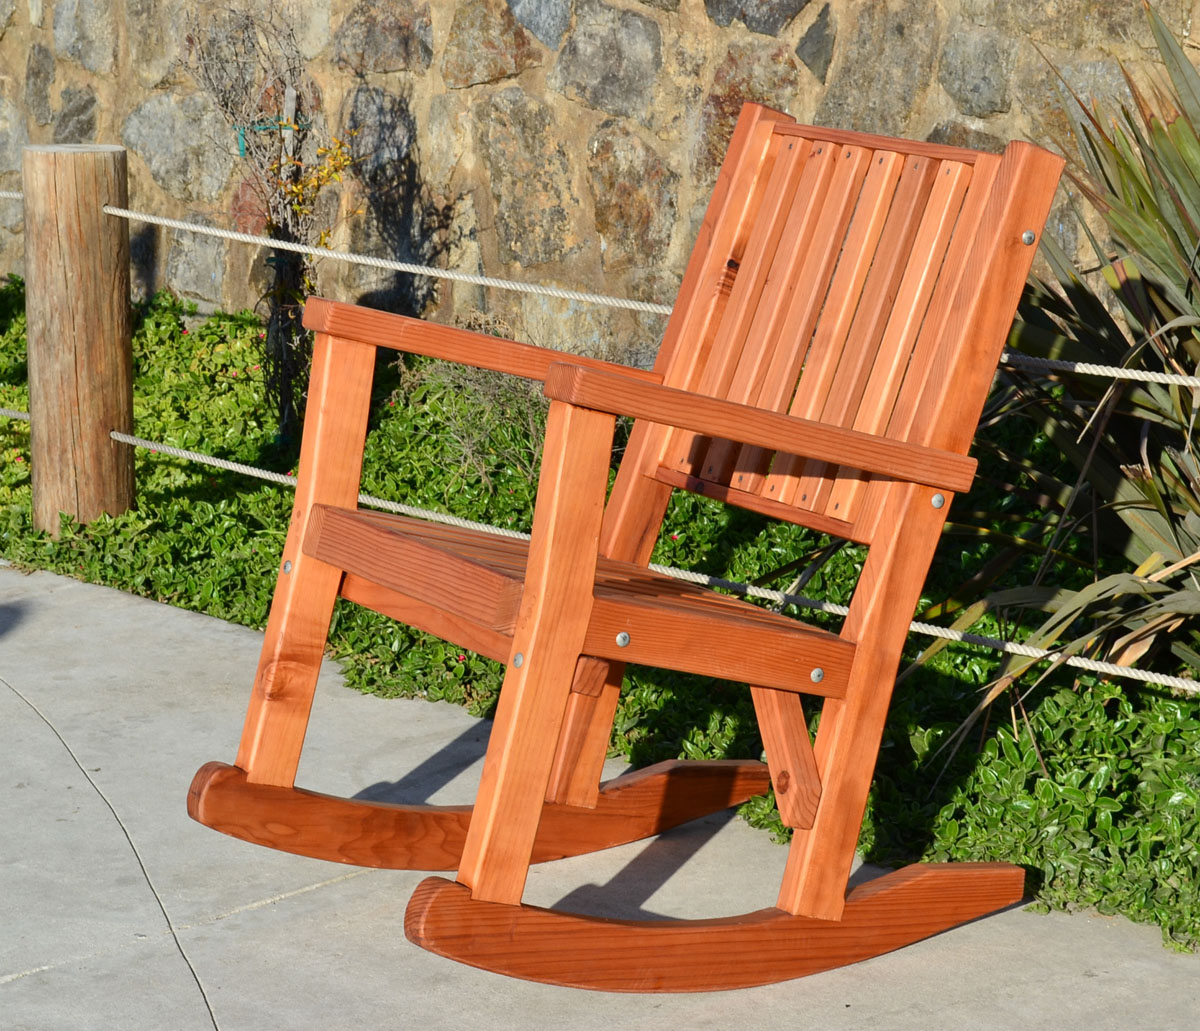 https://www.foreverredwood.com/image/catalog/product/massive-wood-rocking-chair/dsc_0140_1.jpg